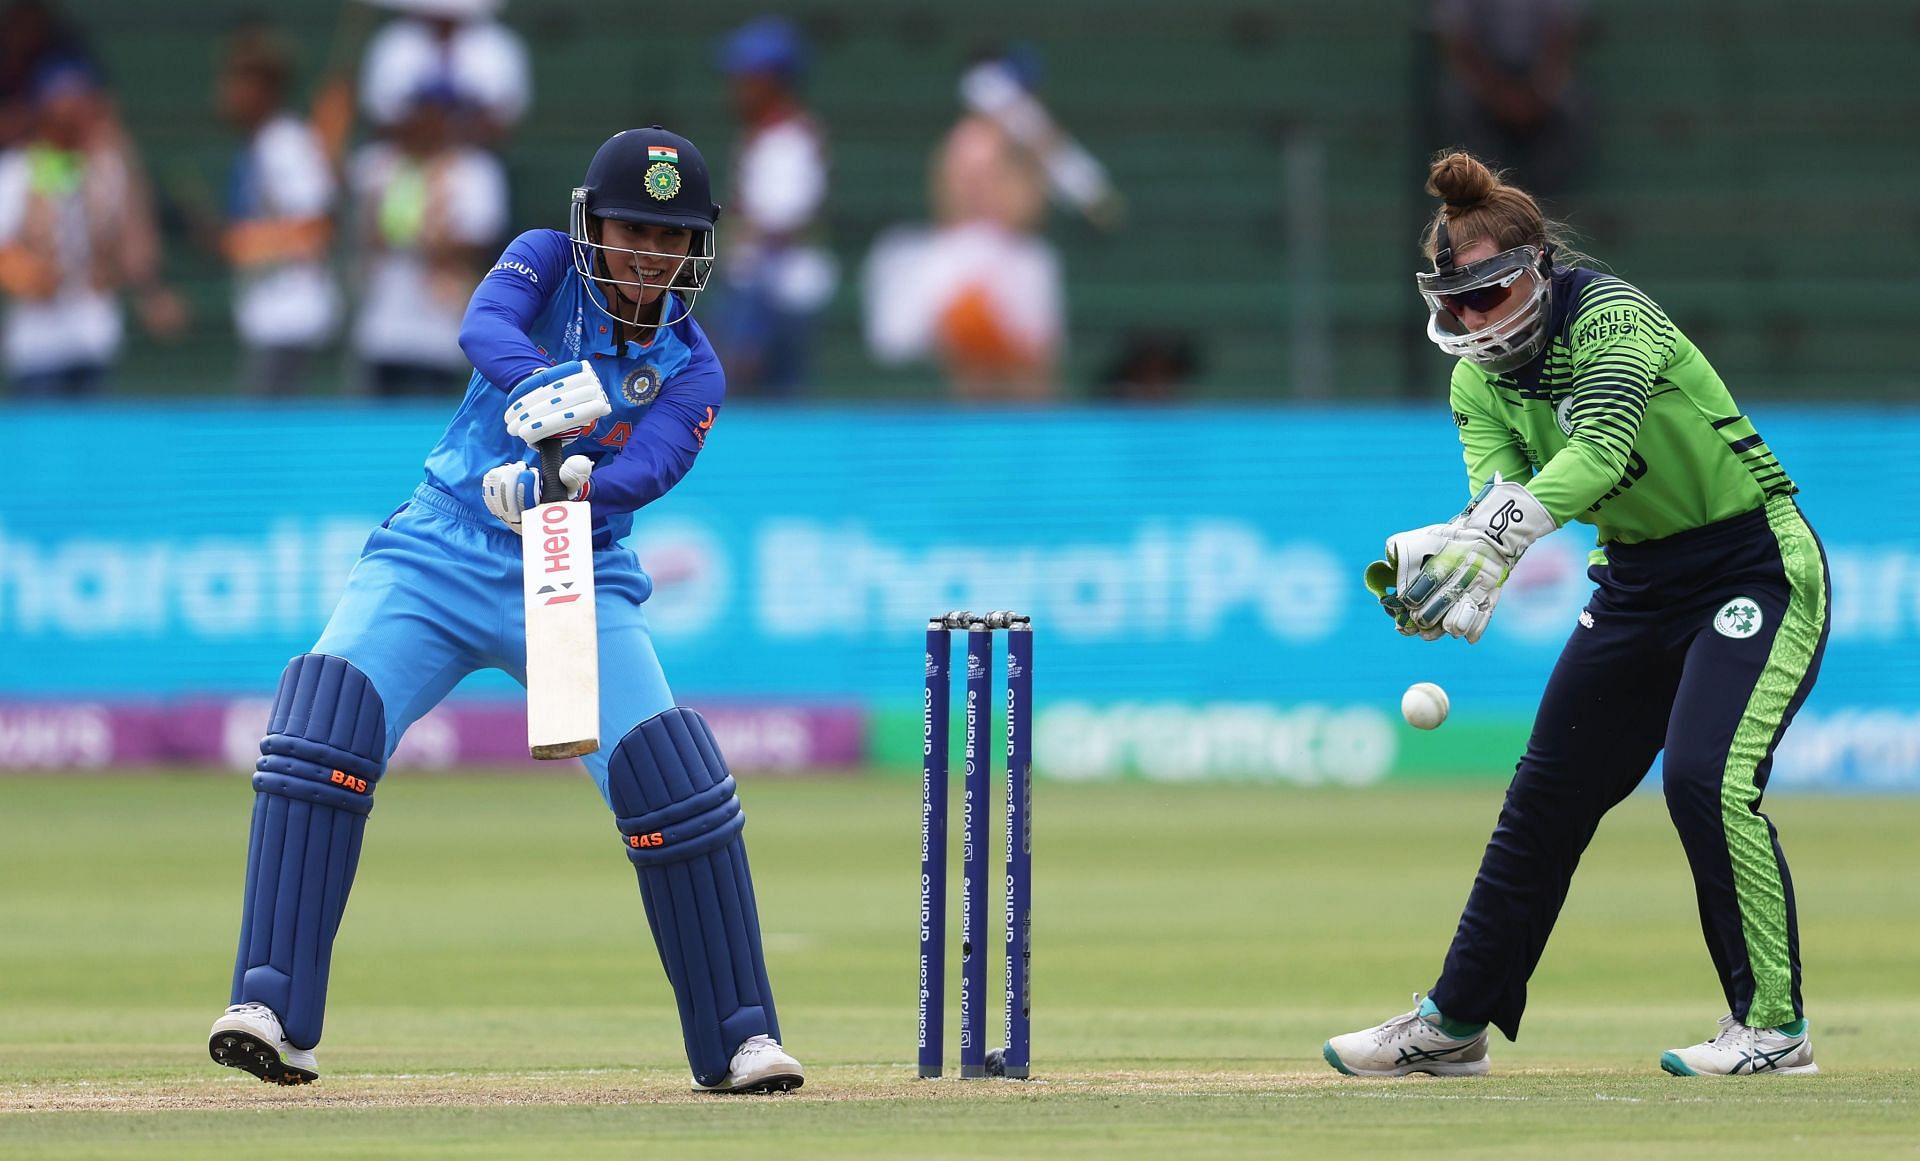 Smriti Mandhana struck nine fours and three sixes during her innings. [P/C: ICC]